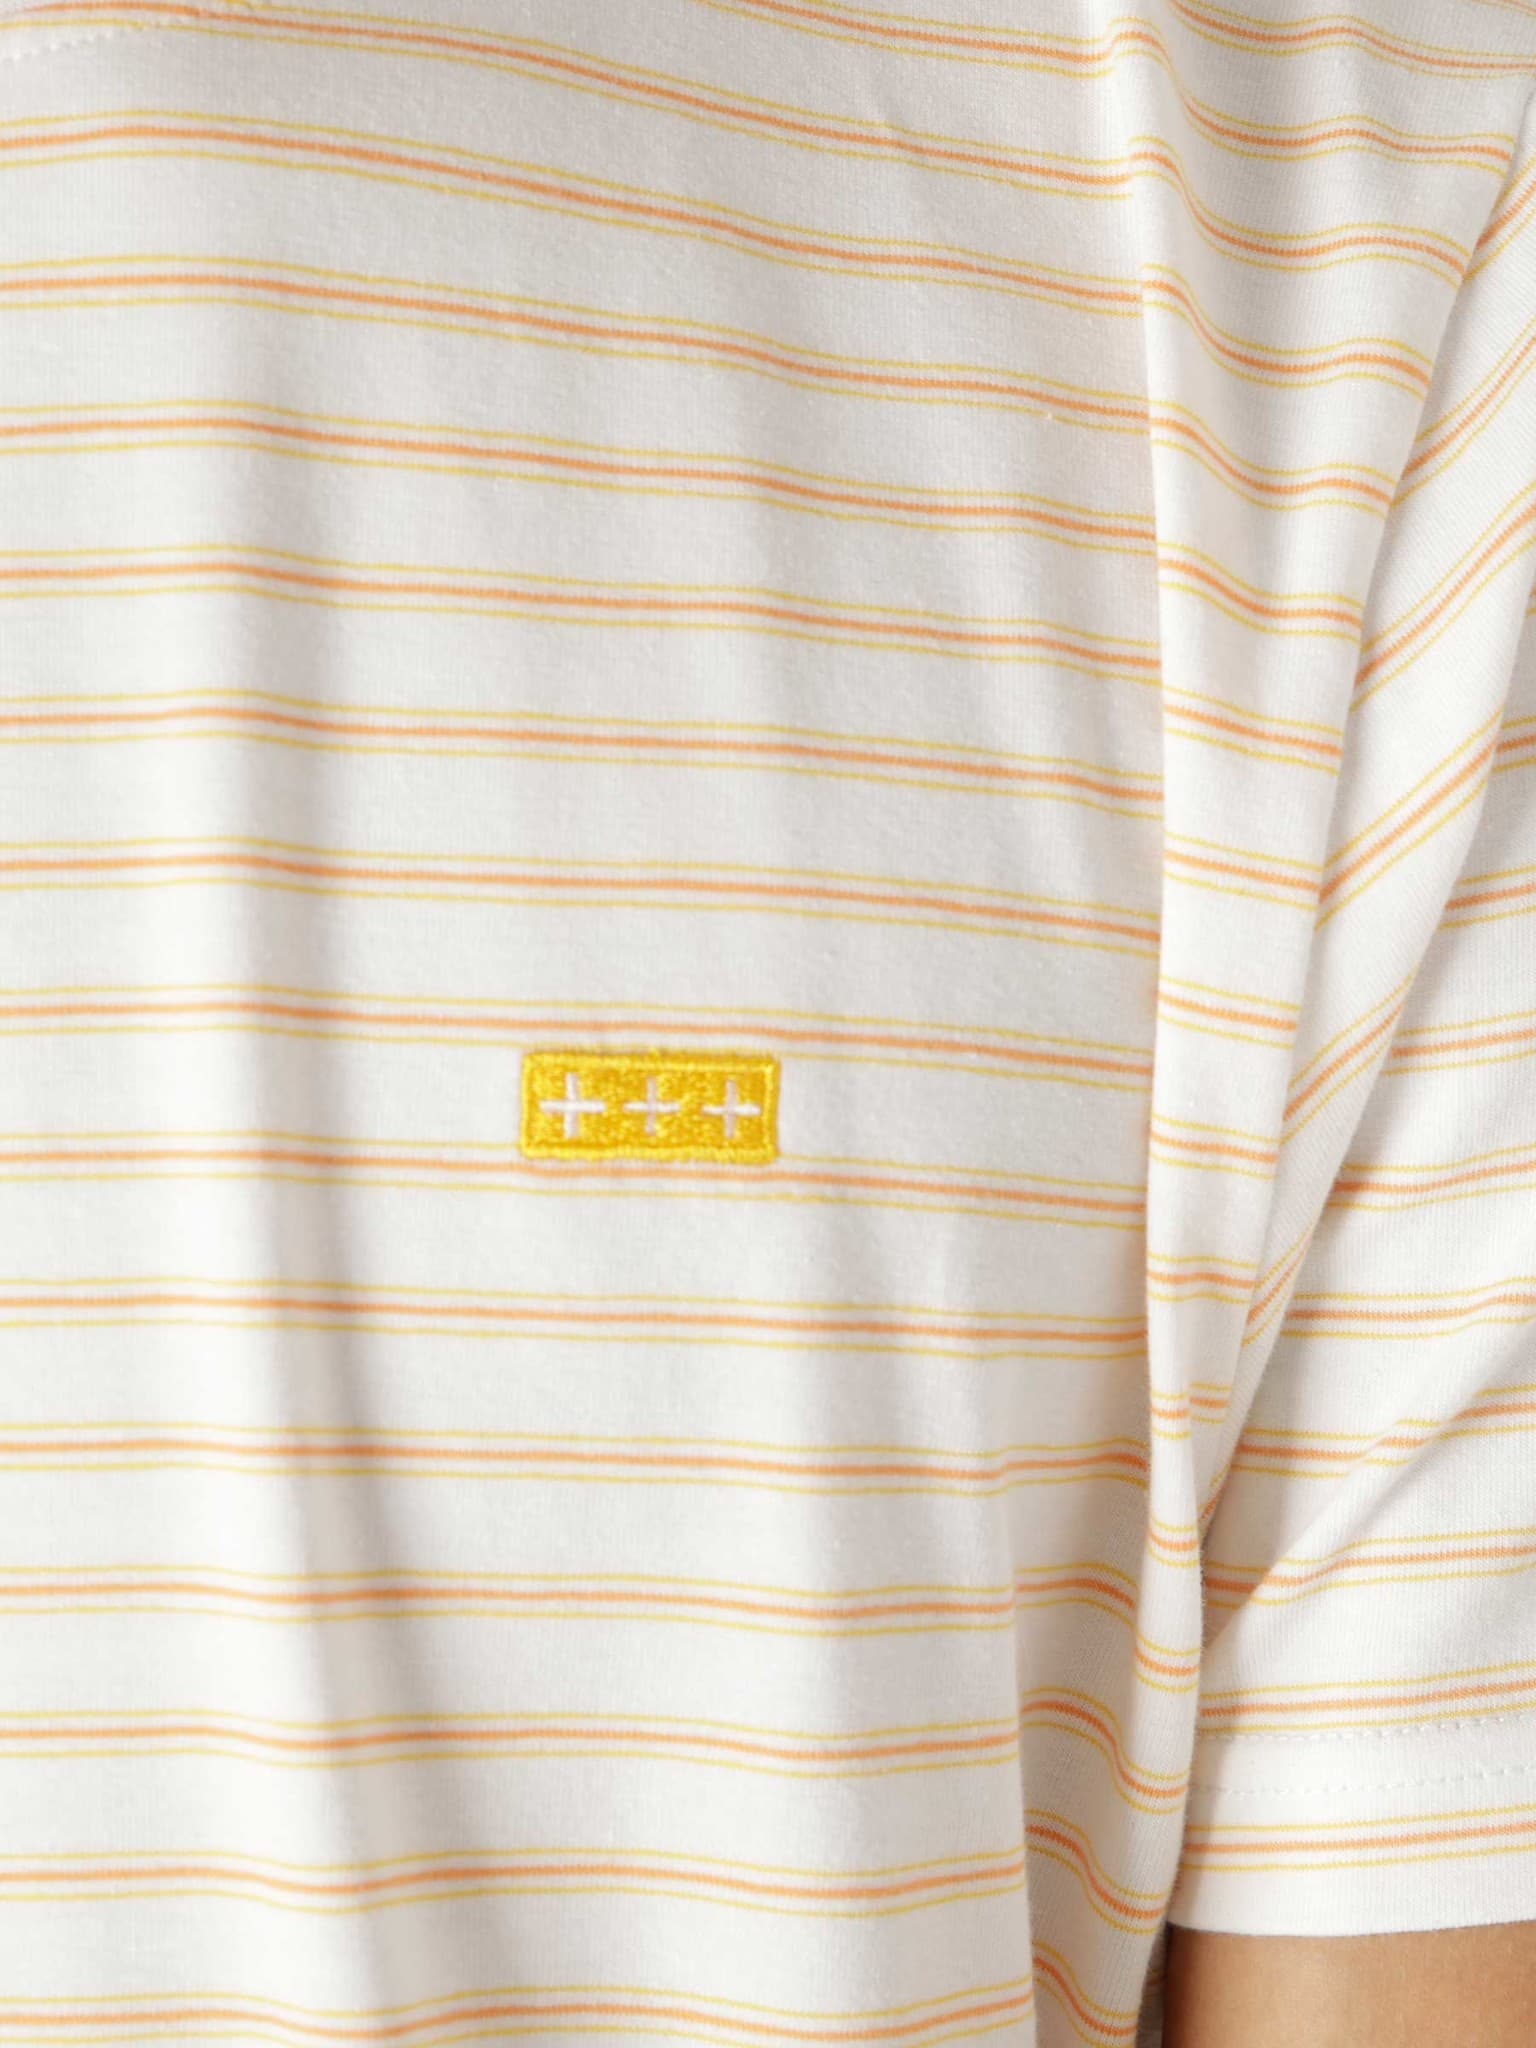 QB601 Stripe T-shirt White Orange Yellow